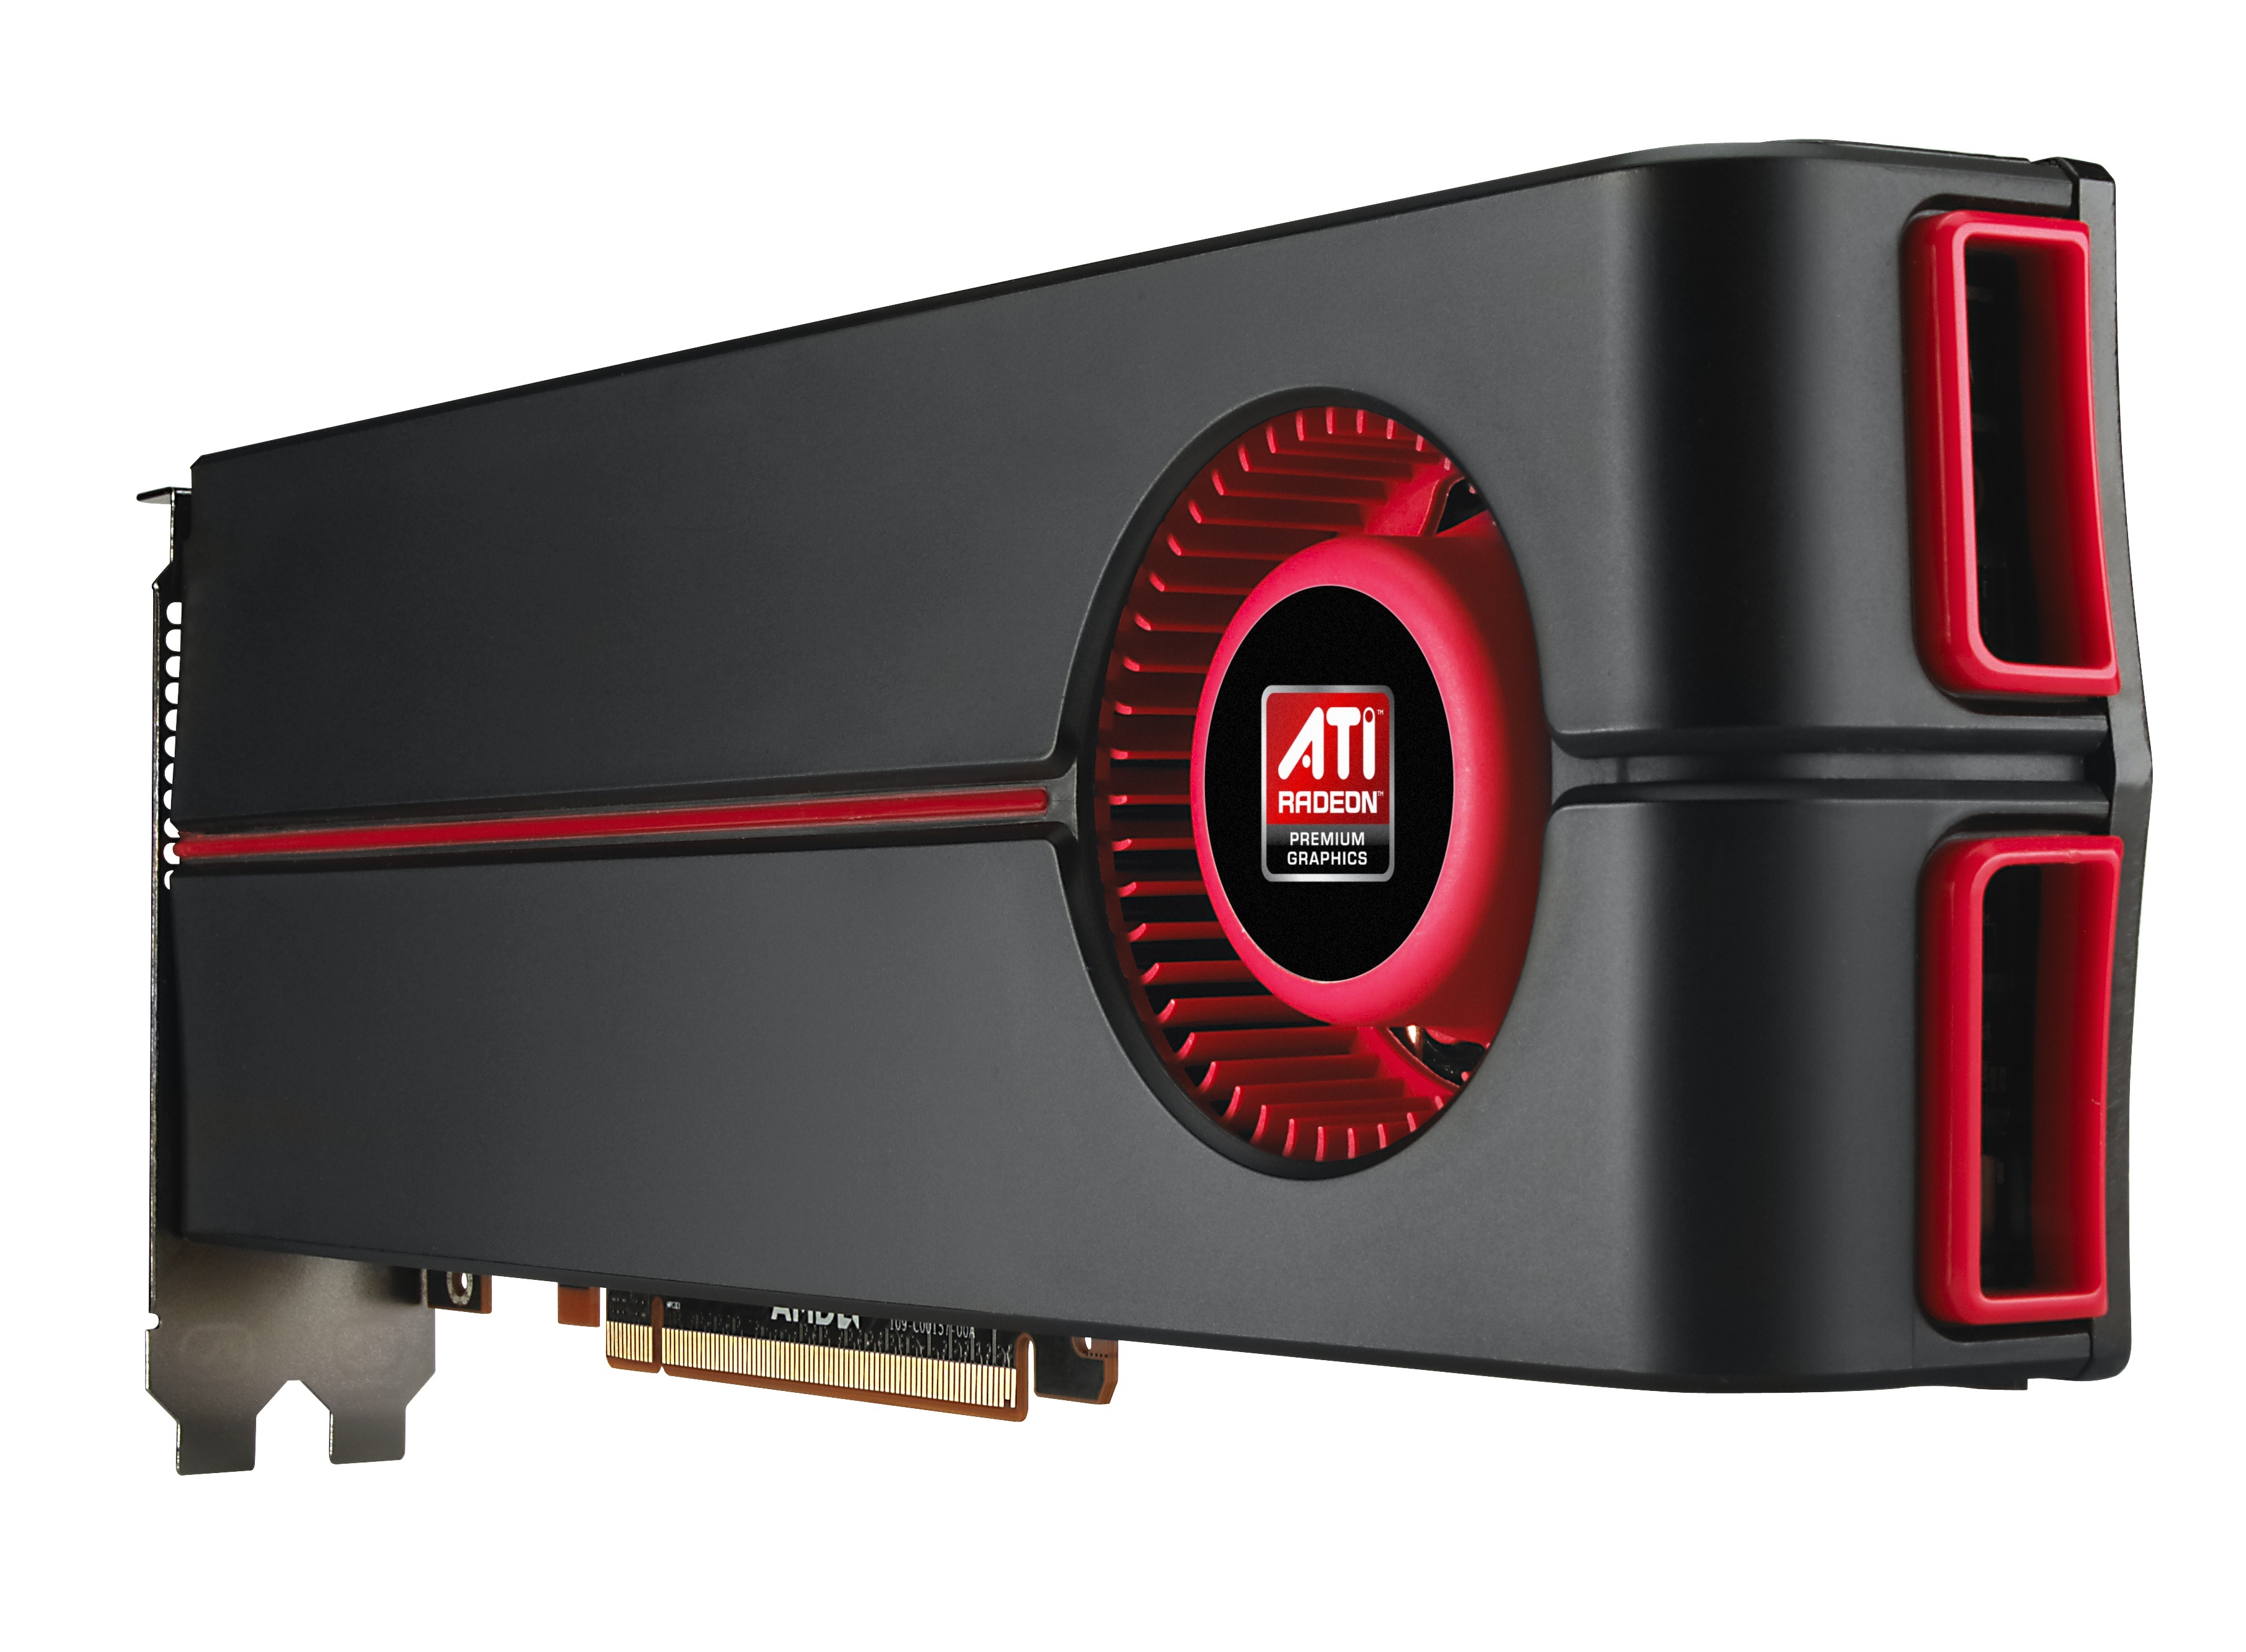 Ati Radeon Hd 5870 Eyefinity 6 Edition Test Bald Auf Gamestar Update